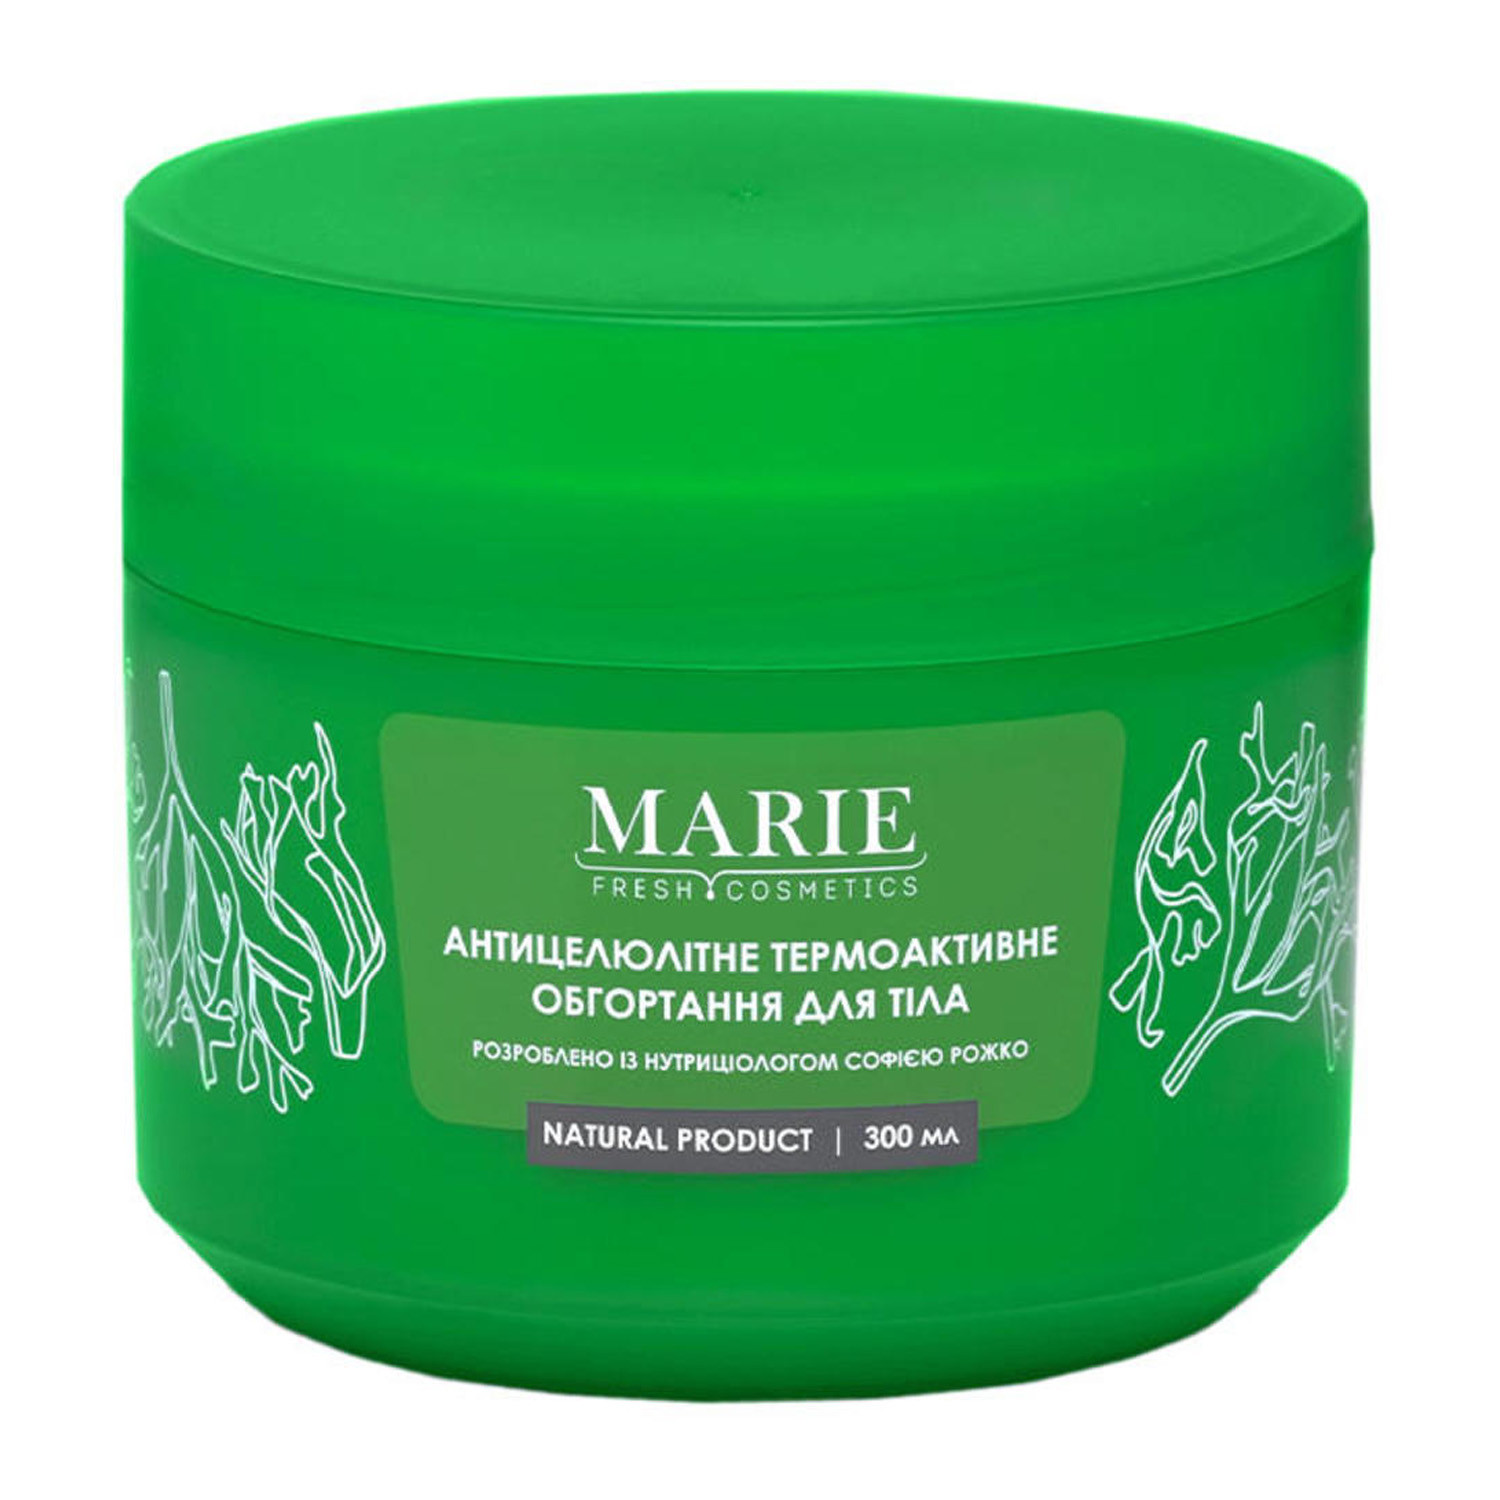 Антицеллюлитное термоактивное обертывание для тела Marie Fresh Cosmetics Marie Fresh Cosmetics